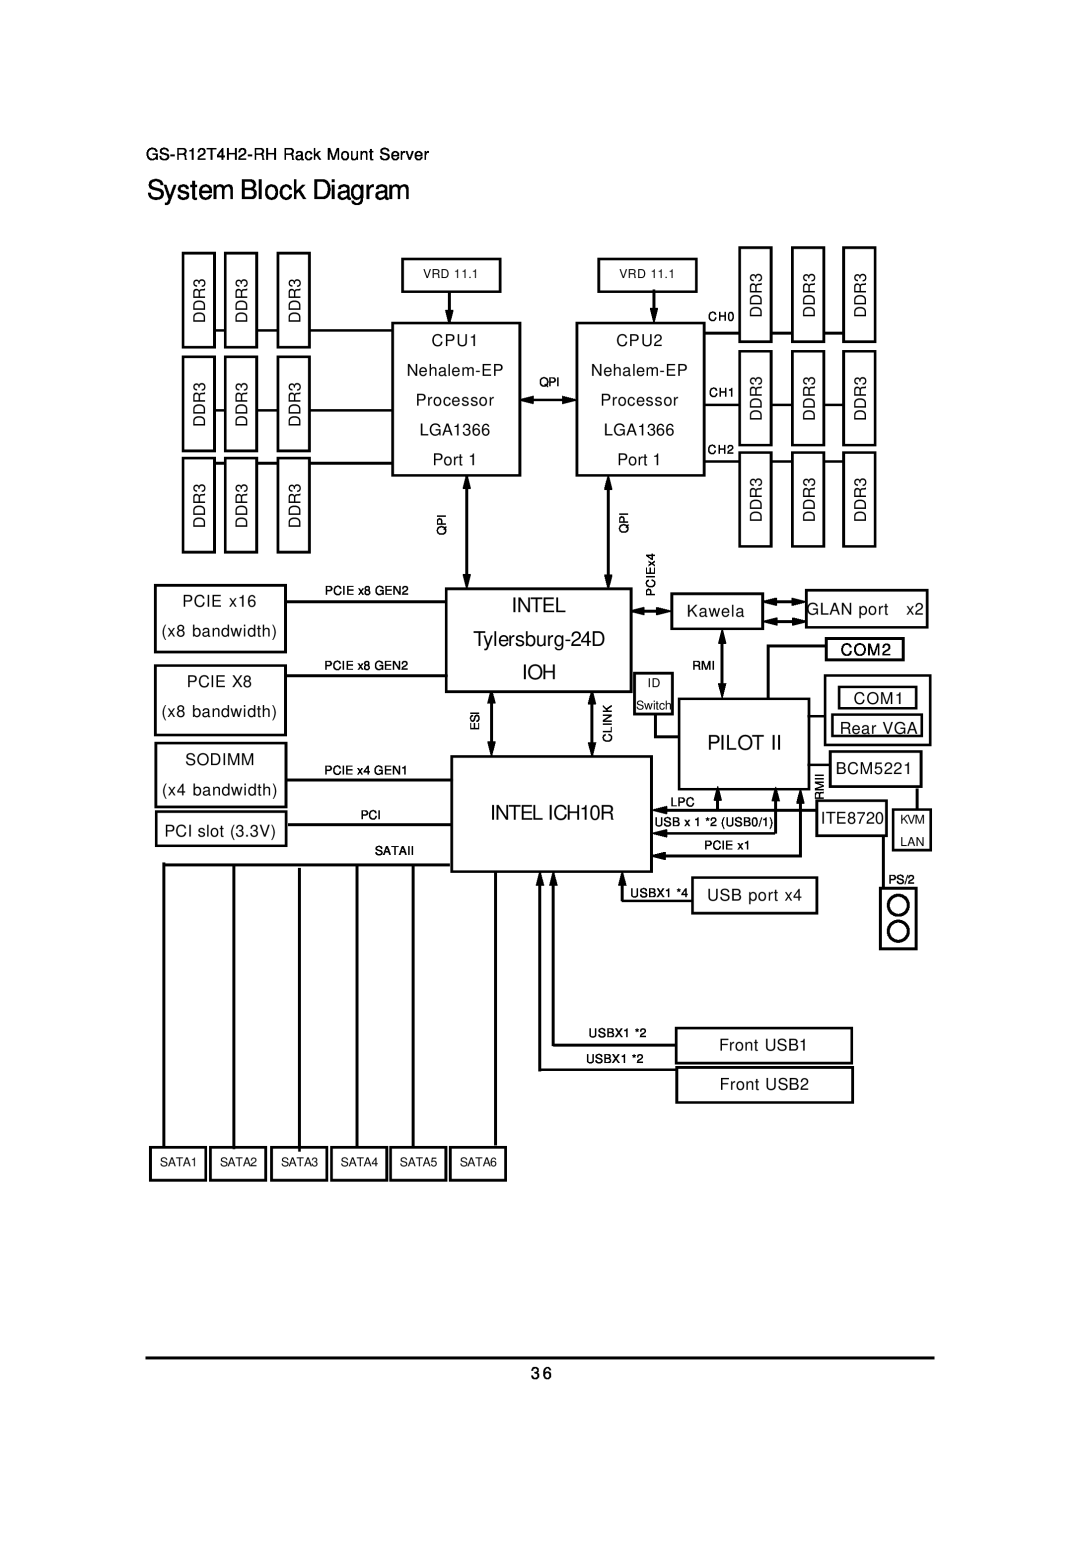 Gigabyte GS-R12T4H2-RH manual System Block Diagram, Pilot 